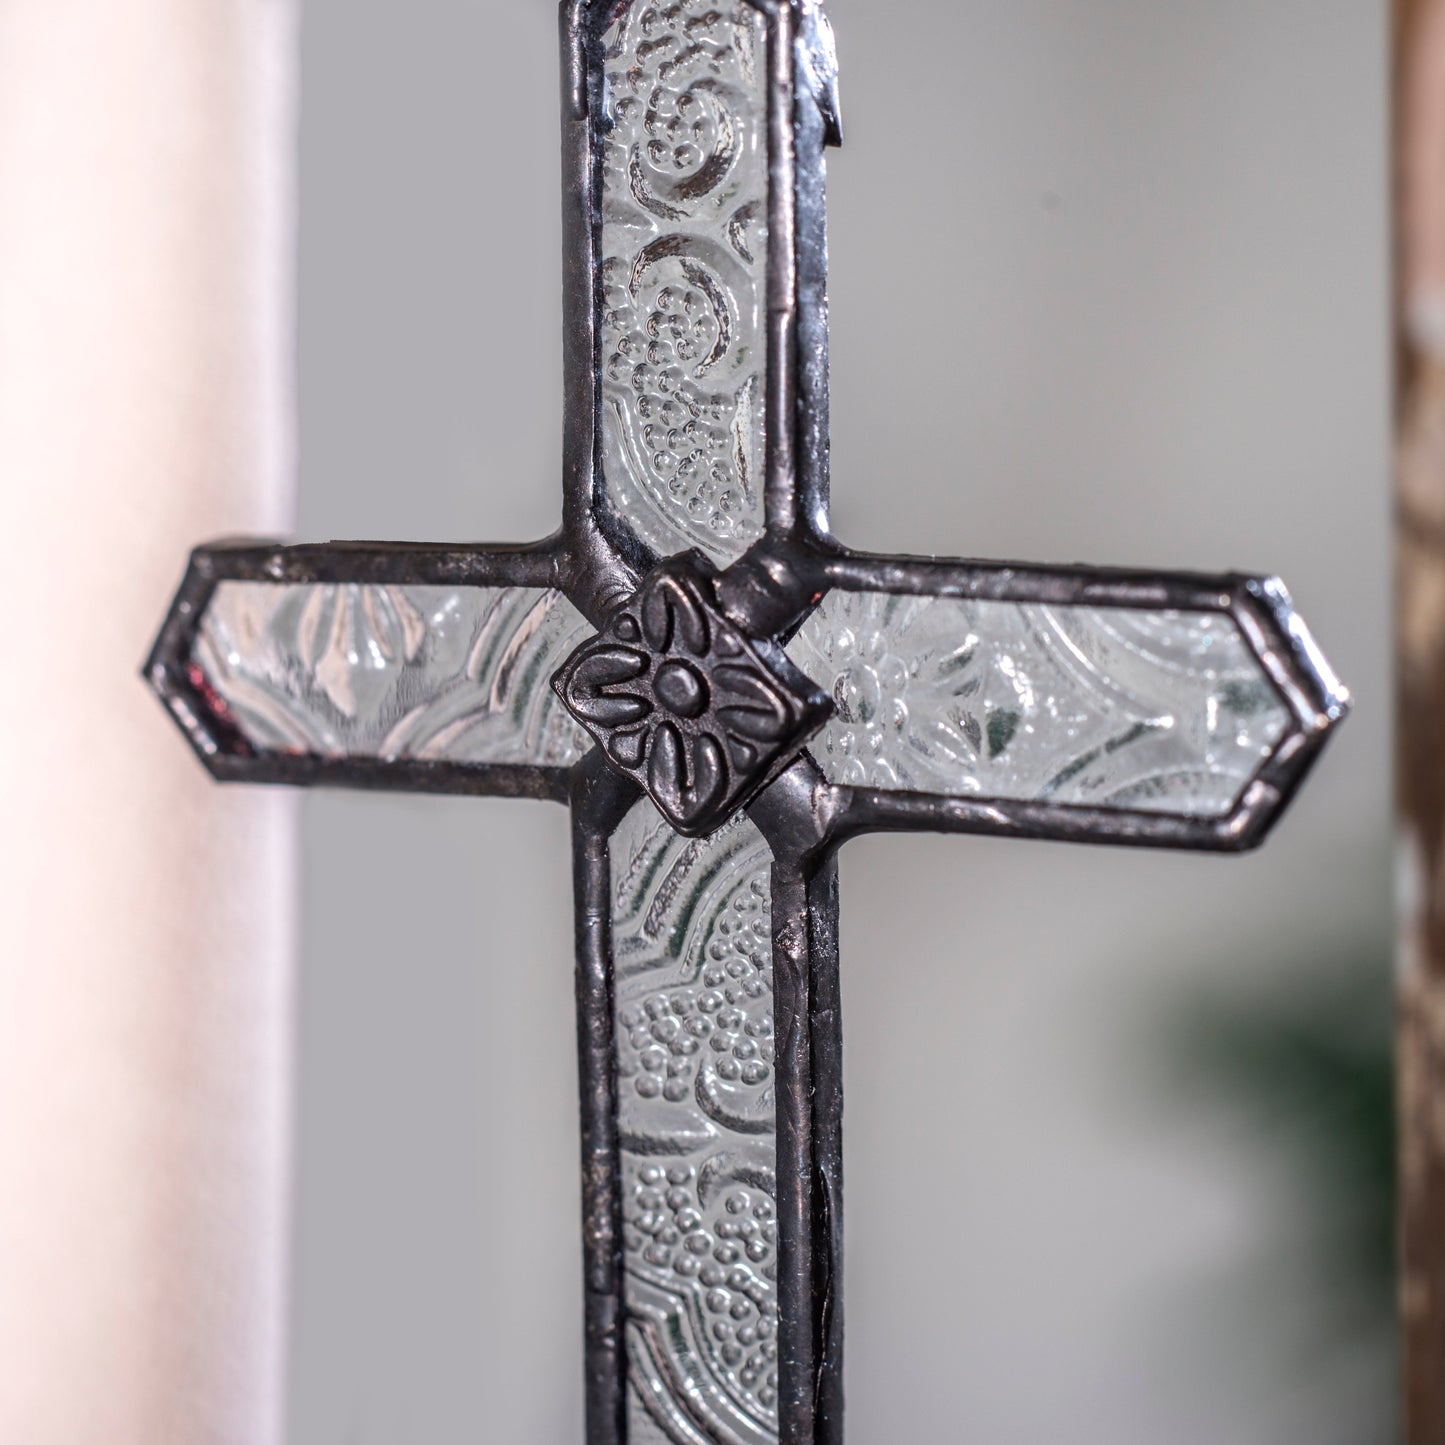 ORN 183-2 Small Vintage Cross Ornament